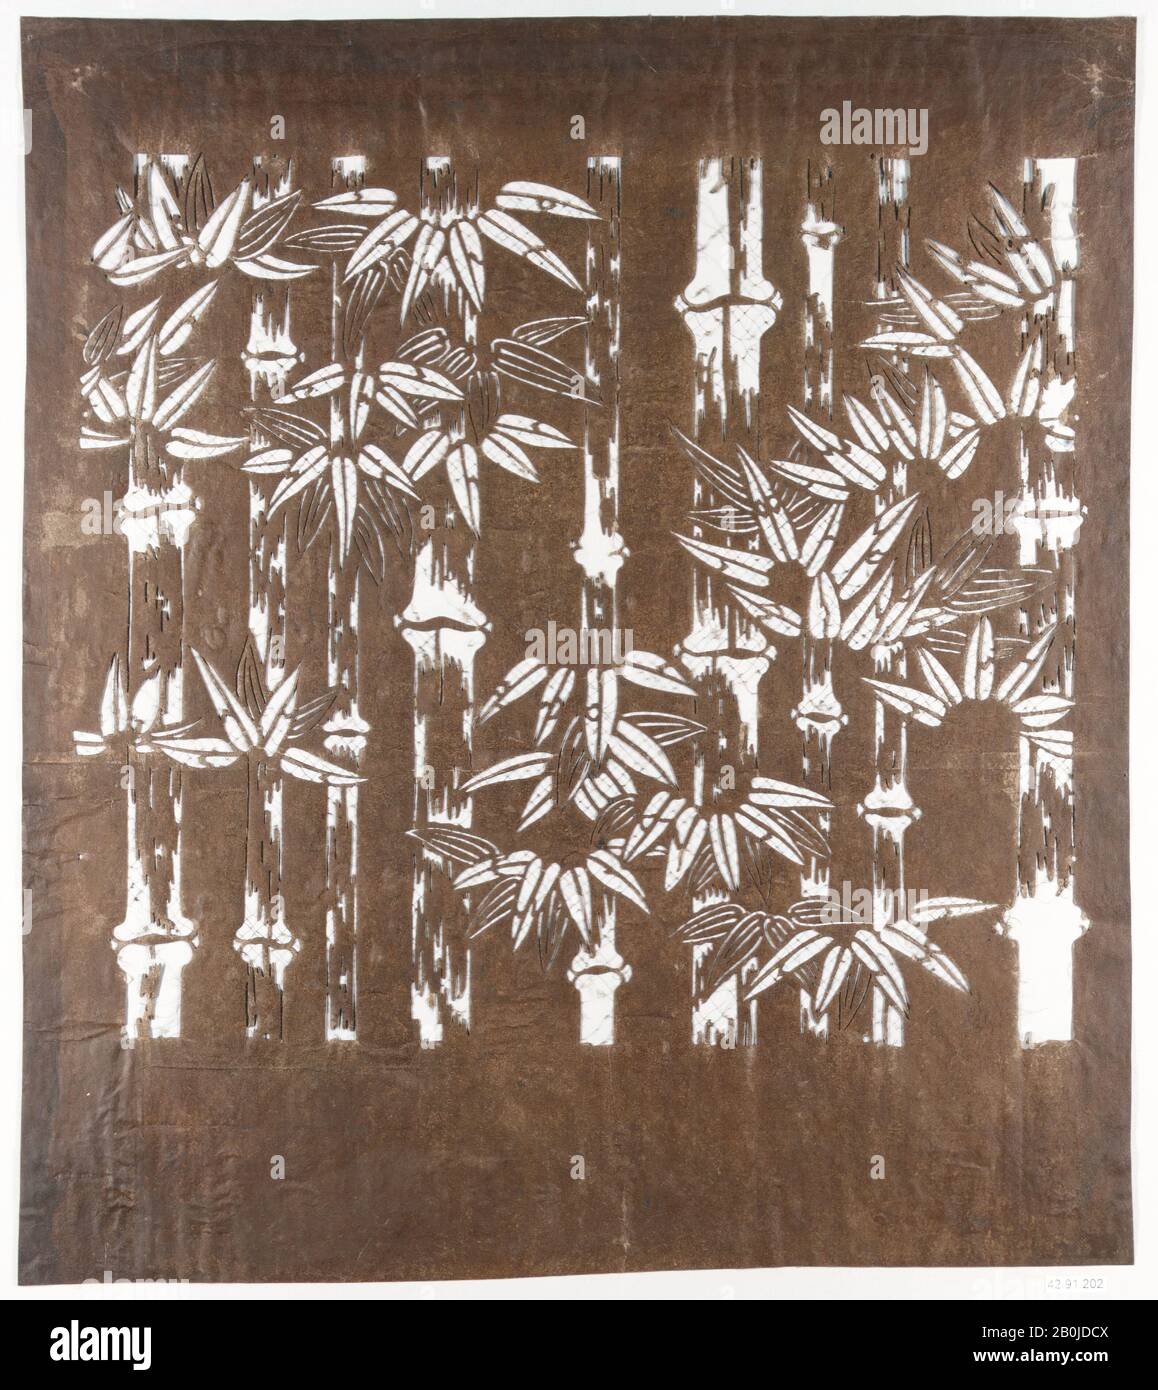 Stencil, Japan, 19th century, Japan, Paper, silk, 19 1/8 x 16 7/8 in. (48.6 x 42.9 cm), Stencils Stock Photo